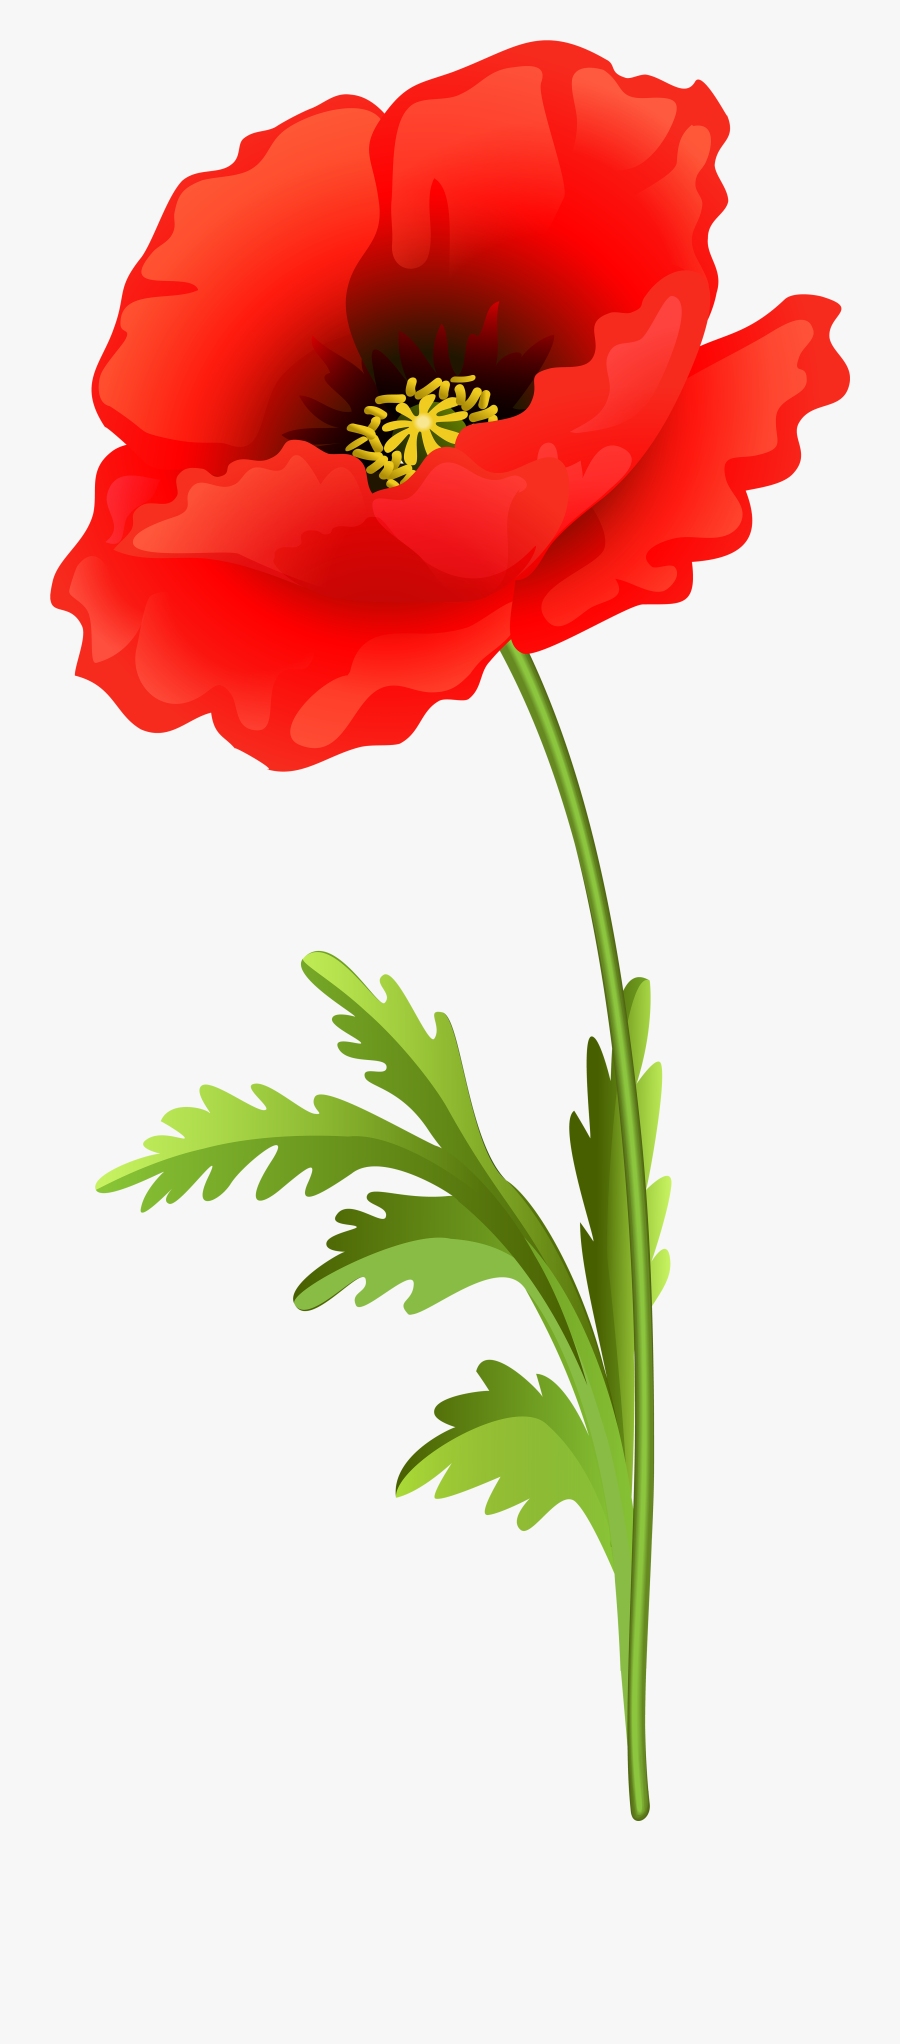 Flowers Clip Art Poppy - Poppy Flower Transparent Background, Transparent Clipart